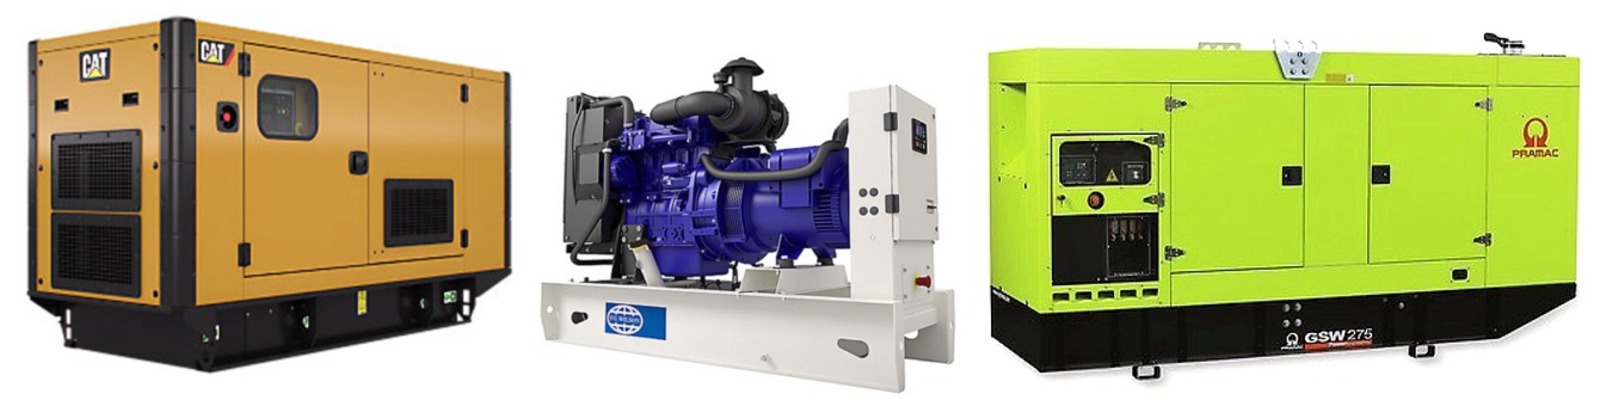 Standby Generators - Standby Diesel Generators